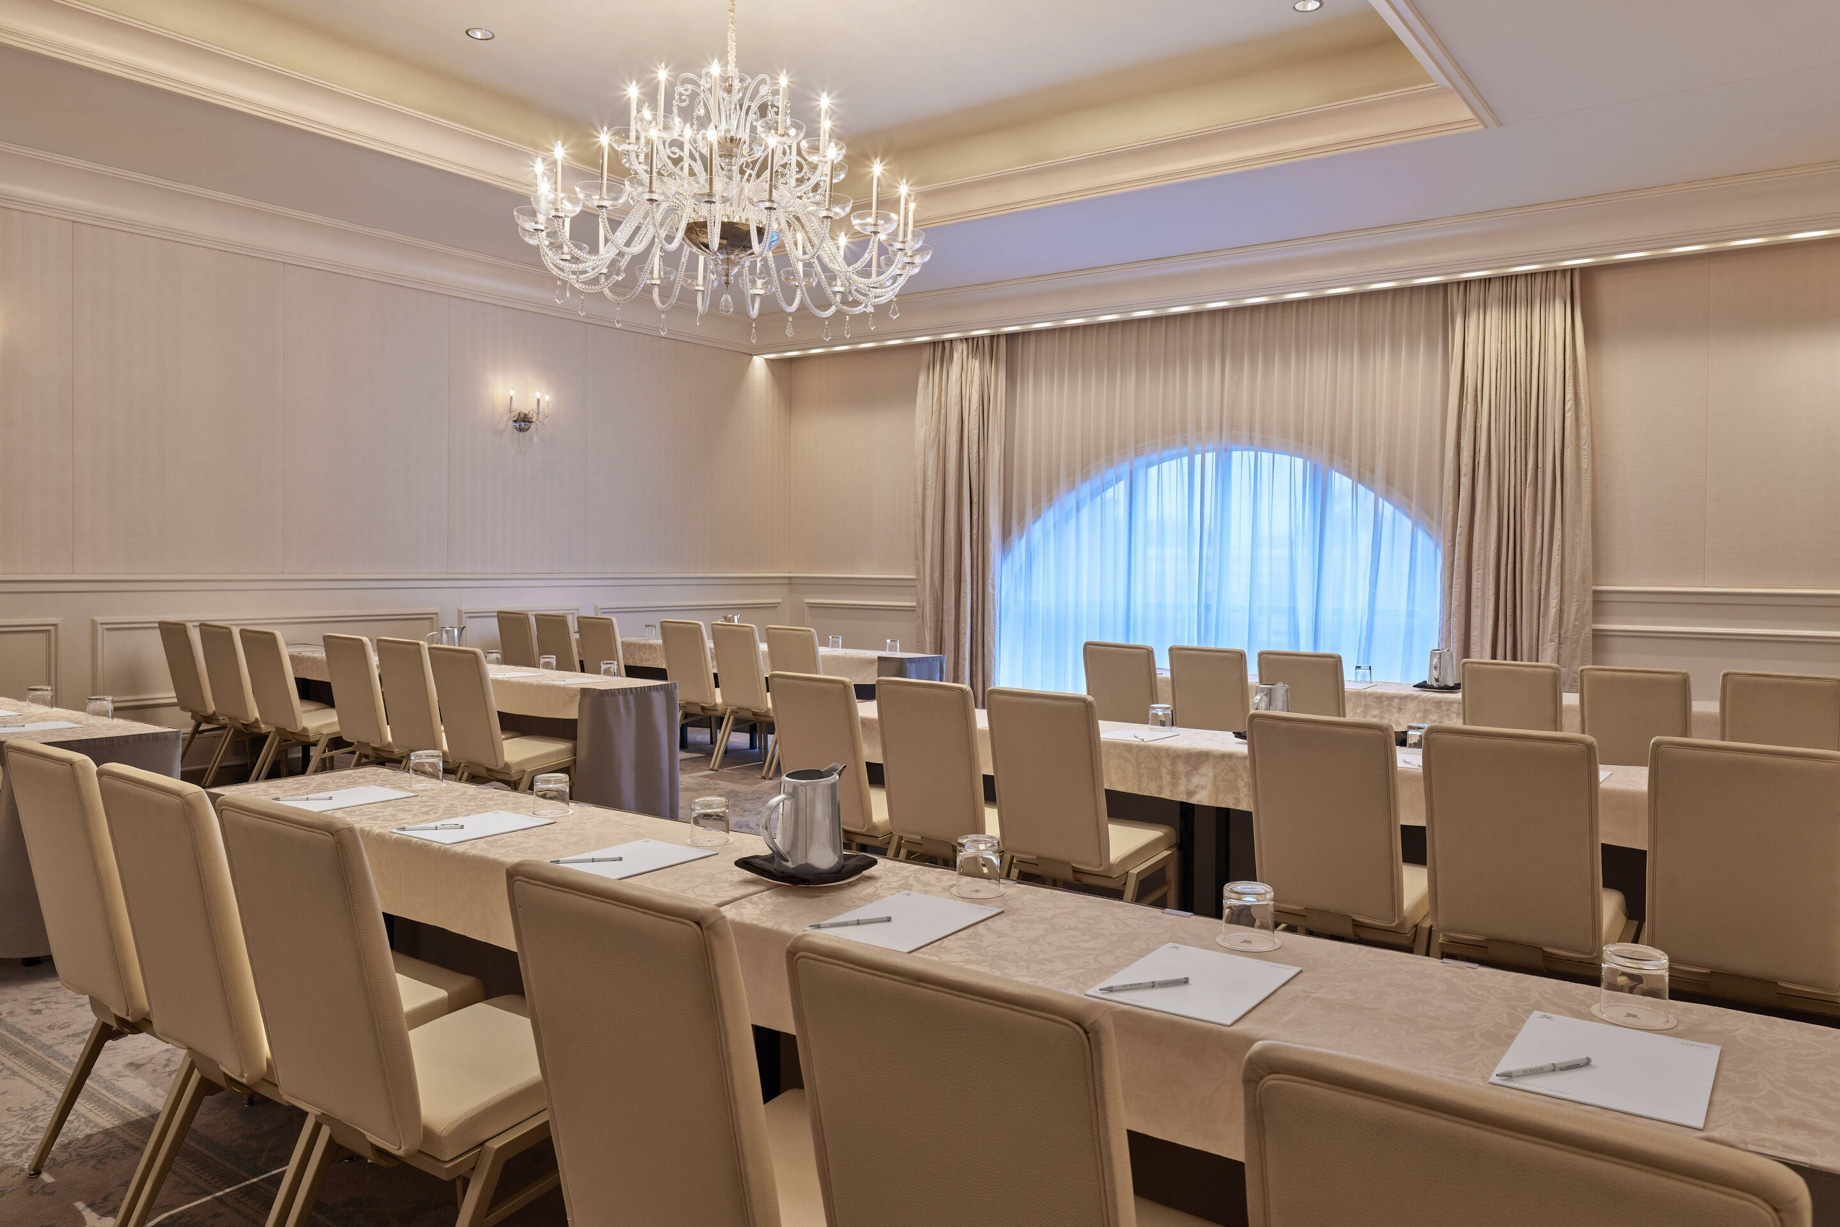 The St. Regis Atlanta Hotel - Atlanta, GA, USA - Rockefeller Meeting Room Classroom Setup